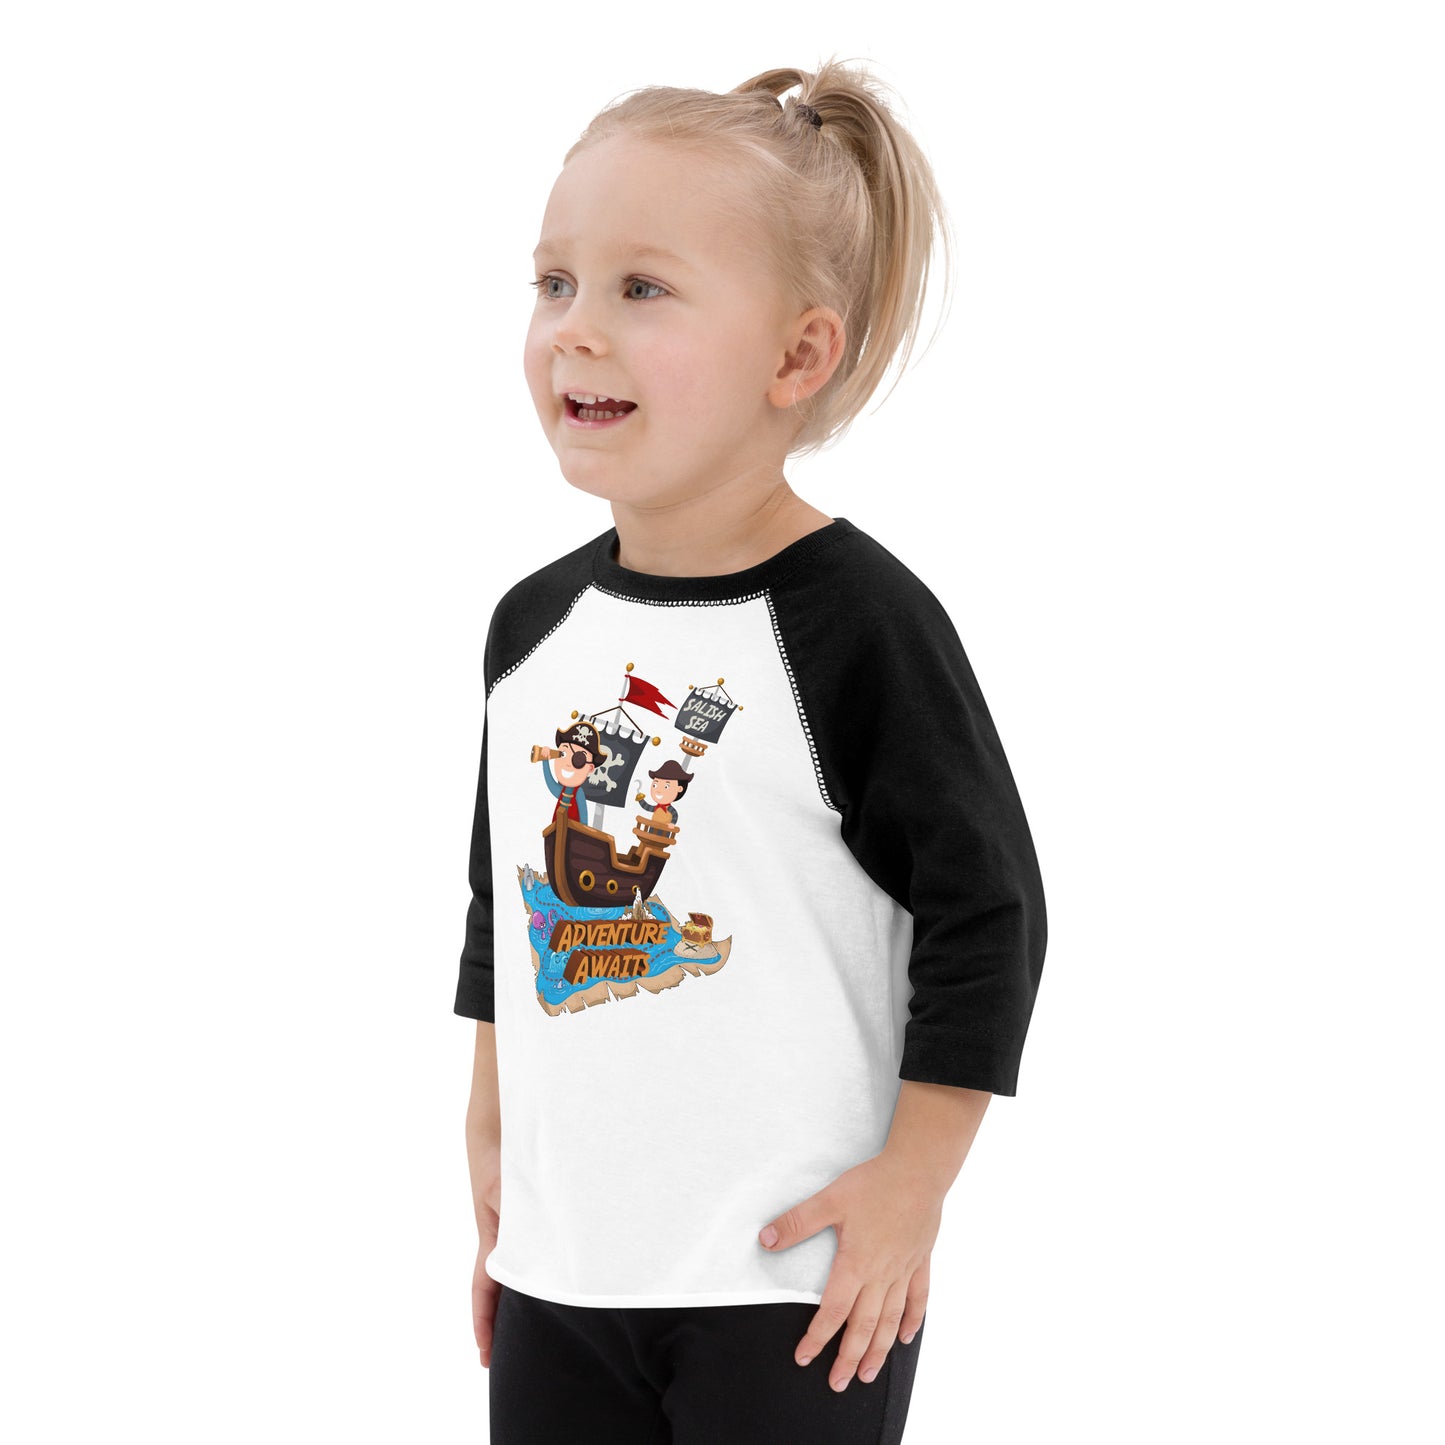 Toddler - "Adventure Awaits" - Baseball Shirt